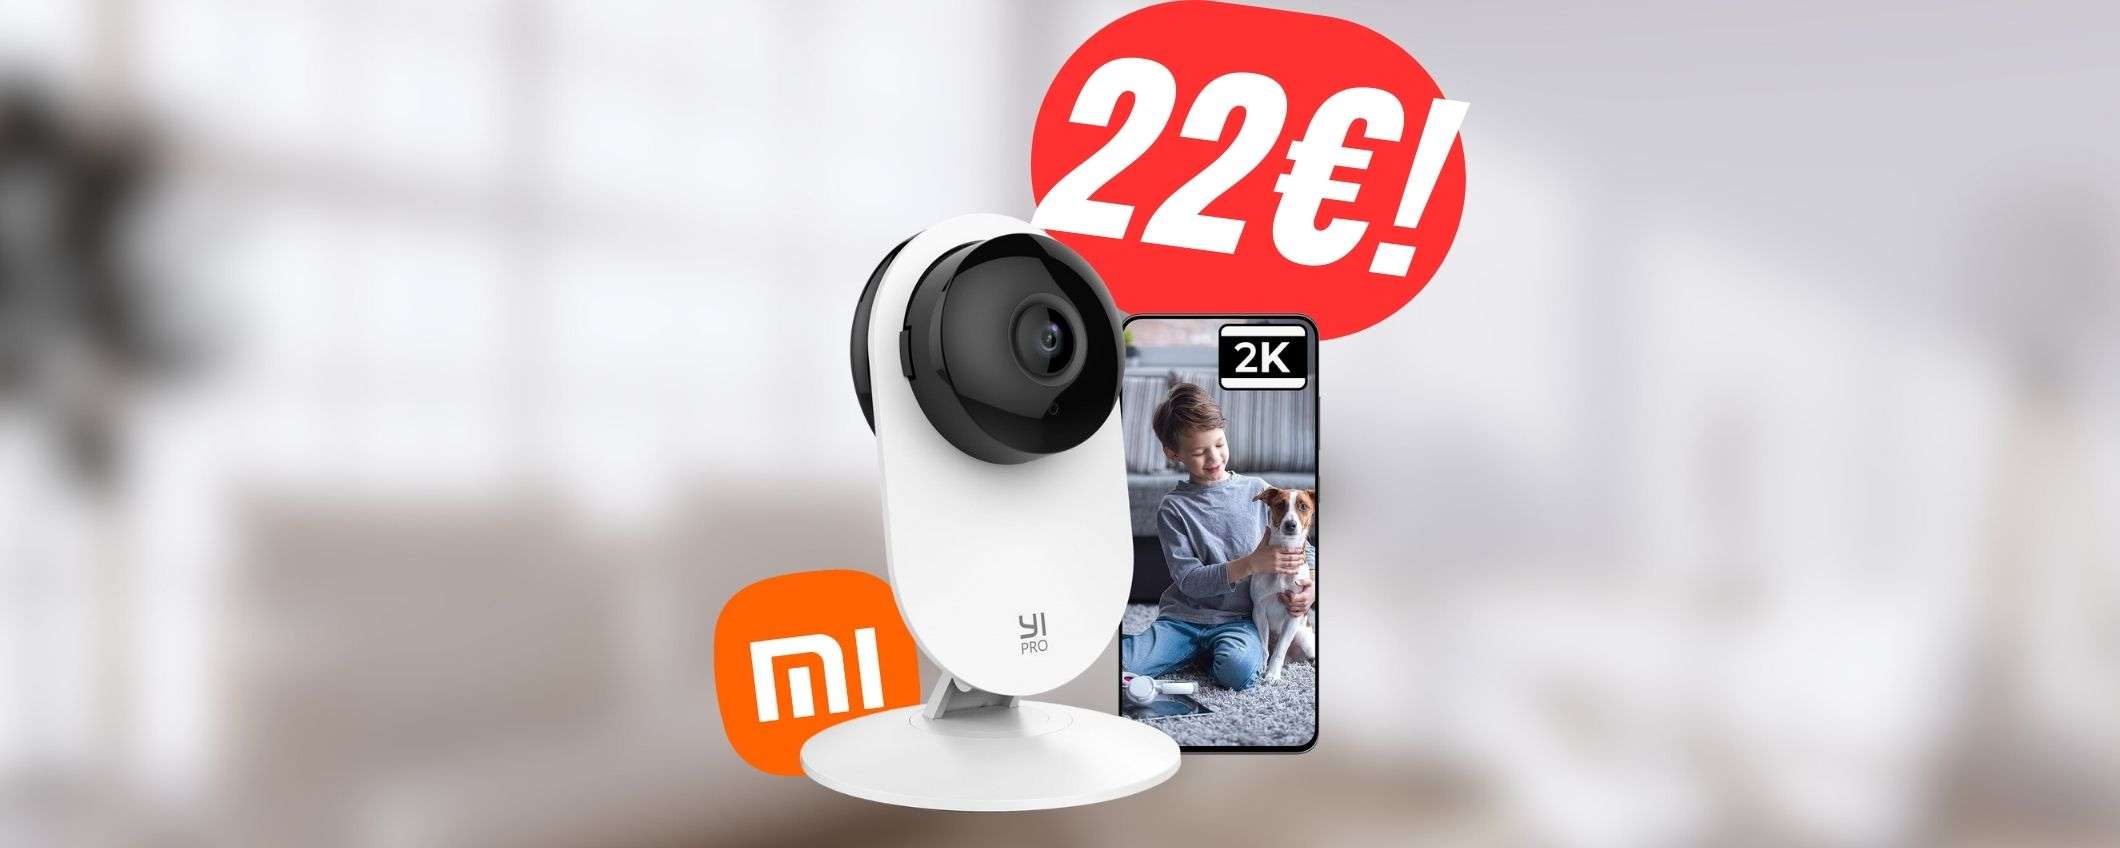 La telecamera 2K di XIAOMI sorveglierà la tua casa per soli 22€!